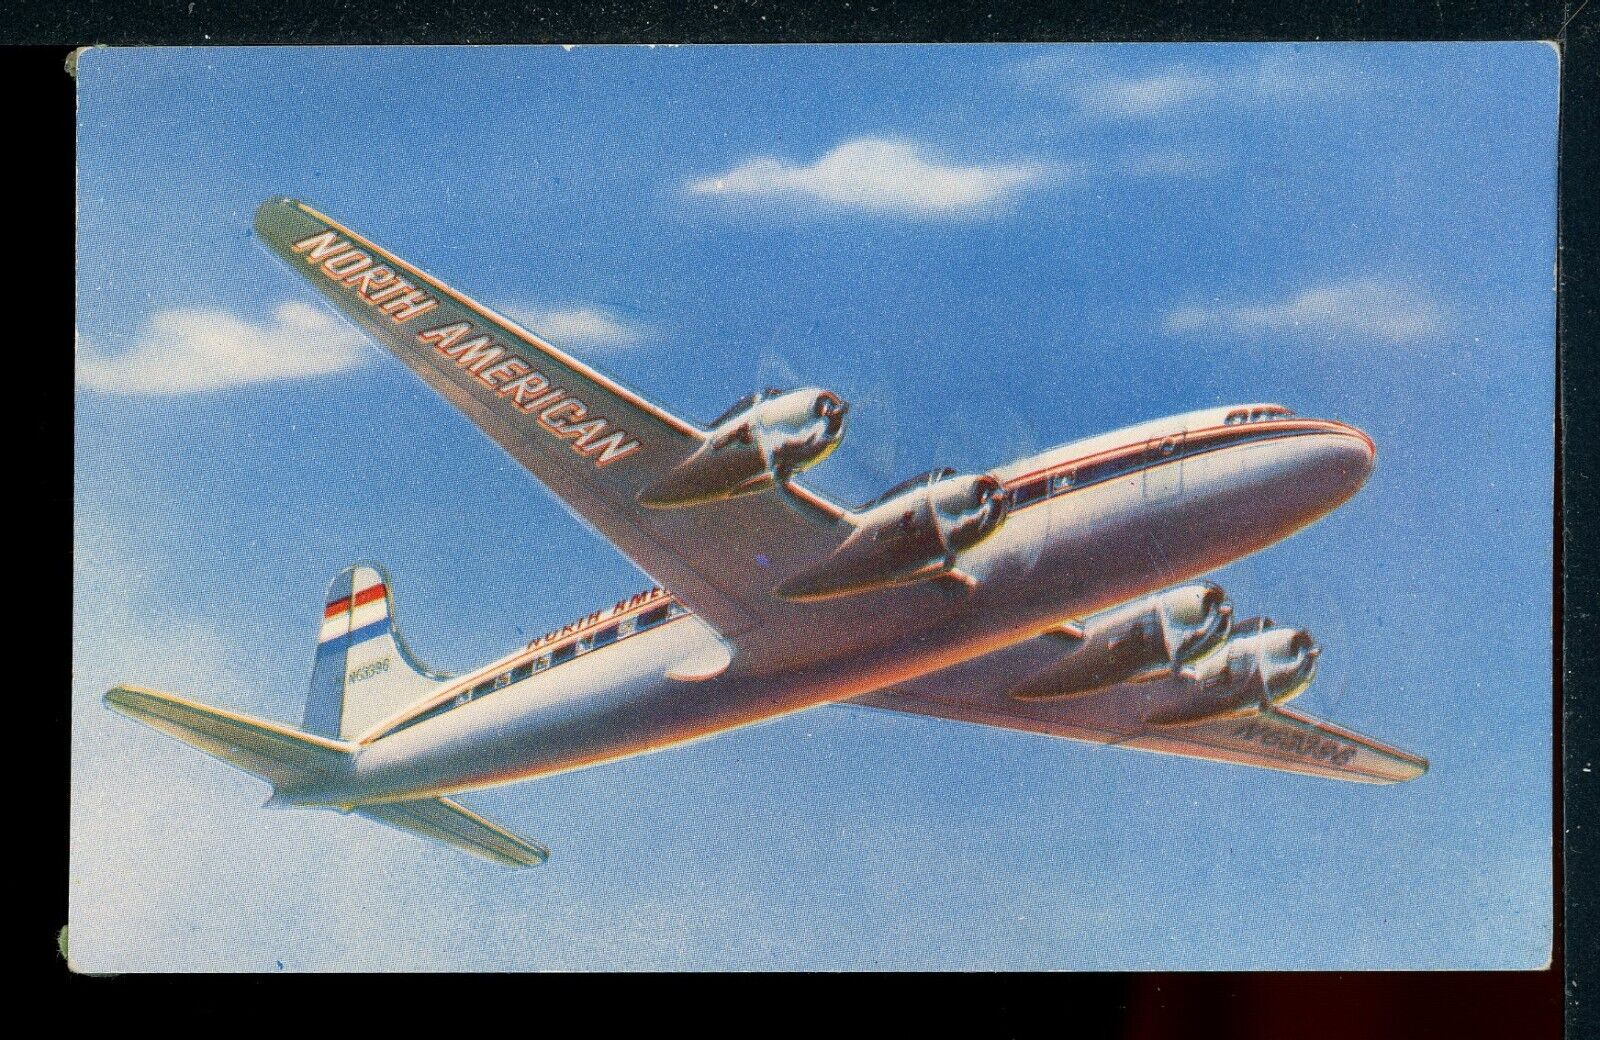 North American Airlines Skymaster Prop Plane Historic Vintage Postcard M1240a